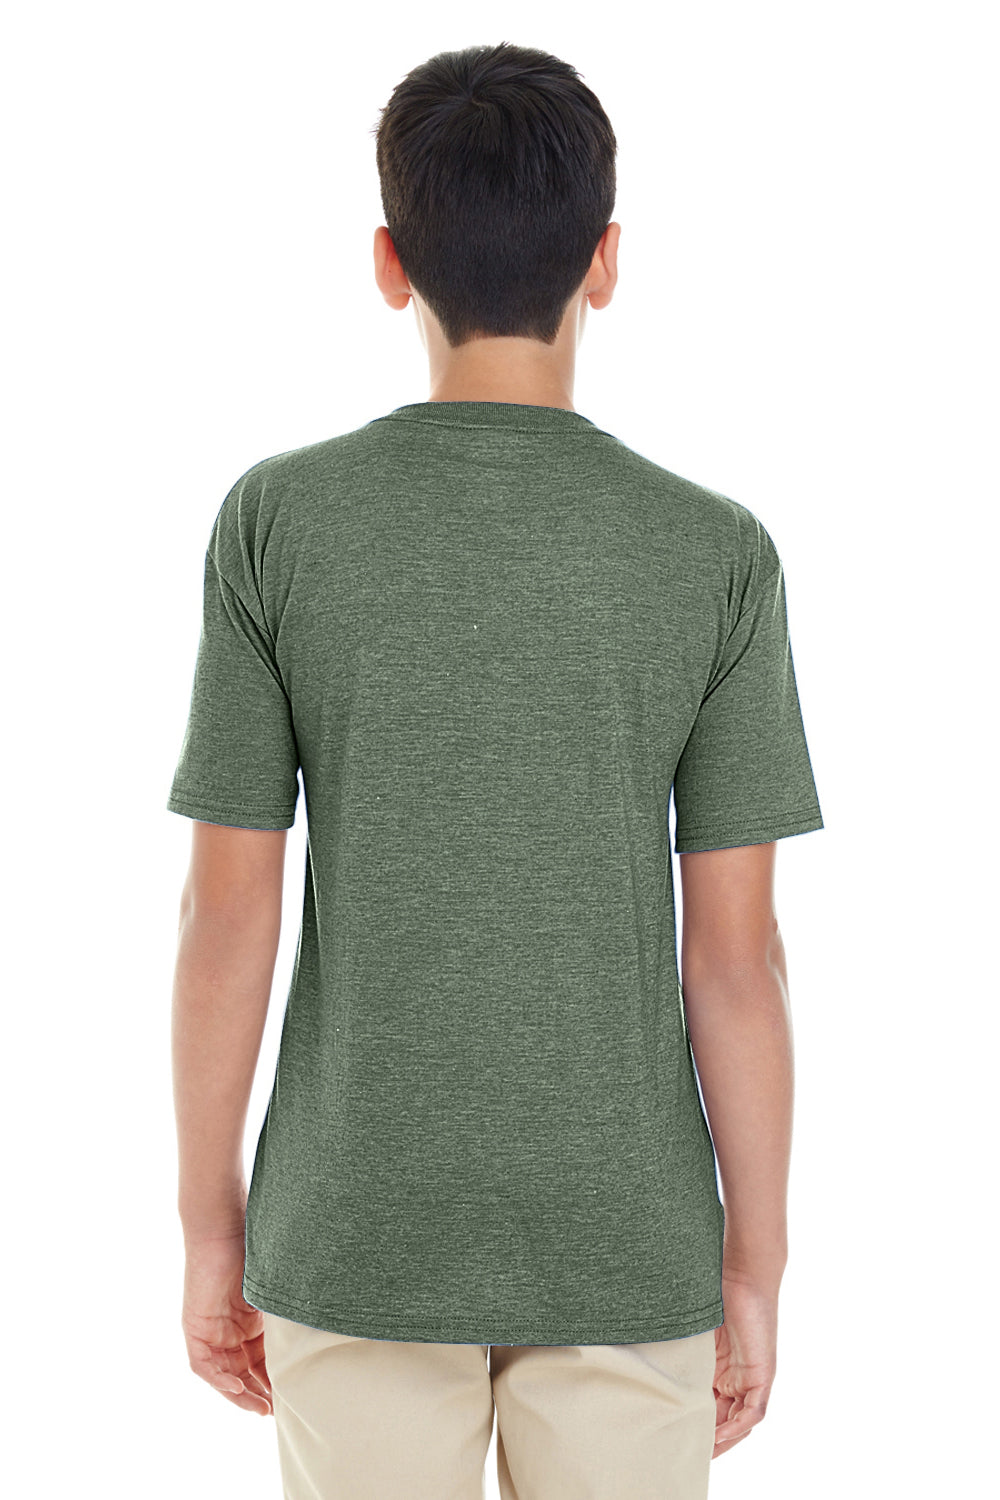 Gildan G645B Youth Softstyle Short Sleeve Crewneck T-Shirt Heather Military Green Back